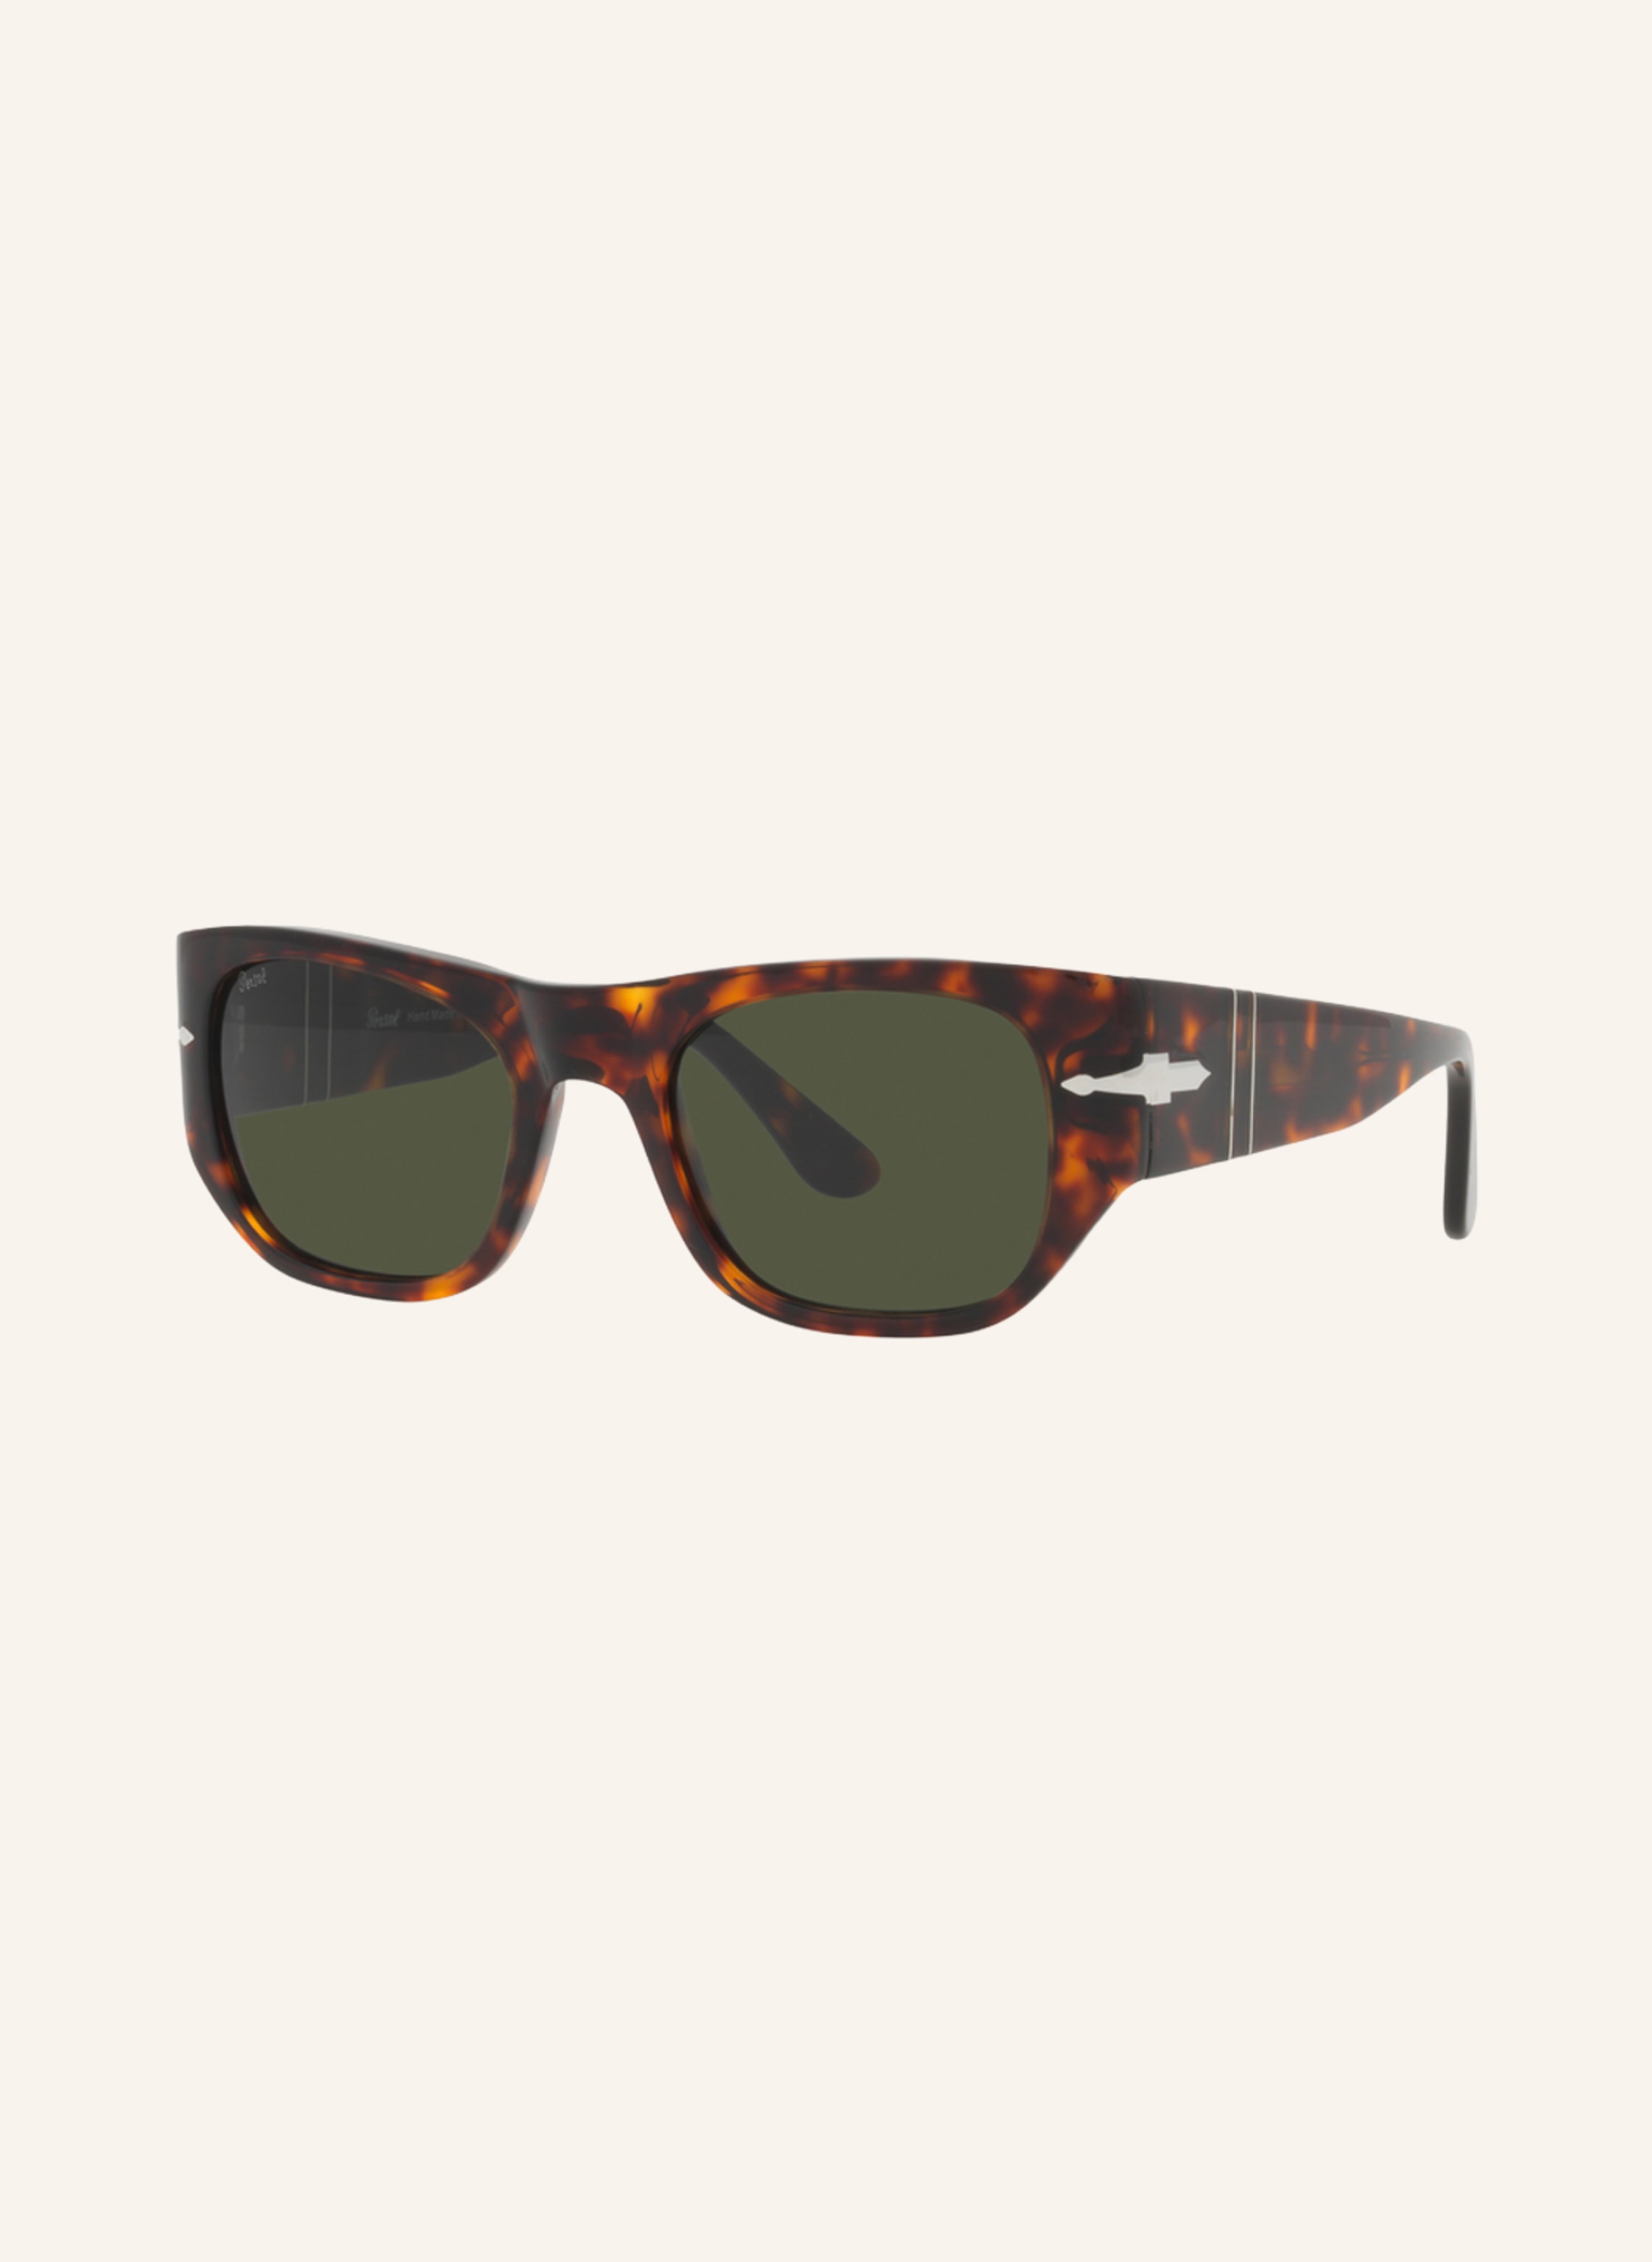 OLIVER PEOPLES Sunglasses PO3308S in 24/31 - havana/green | Breuninger